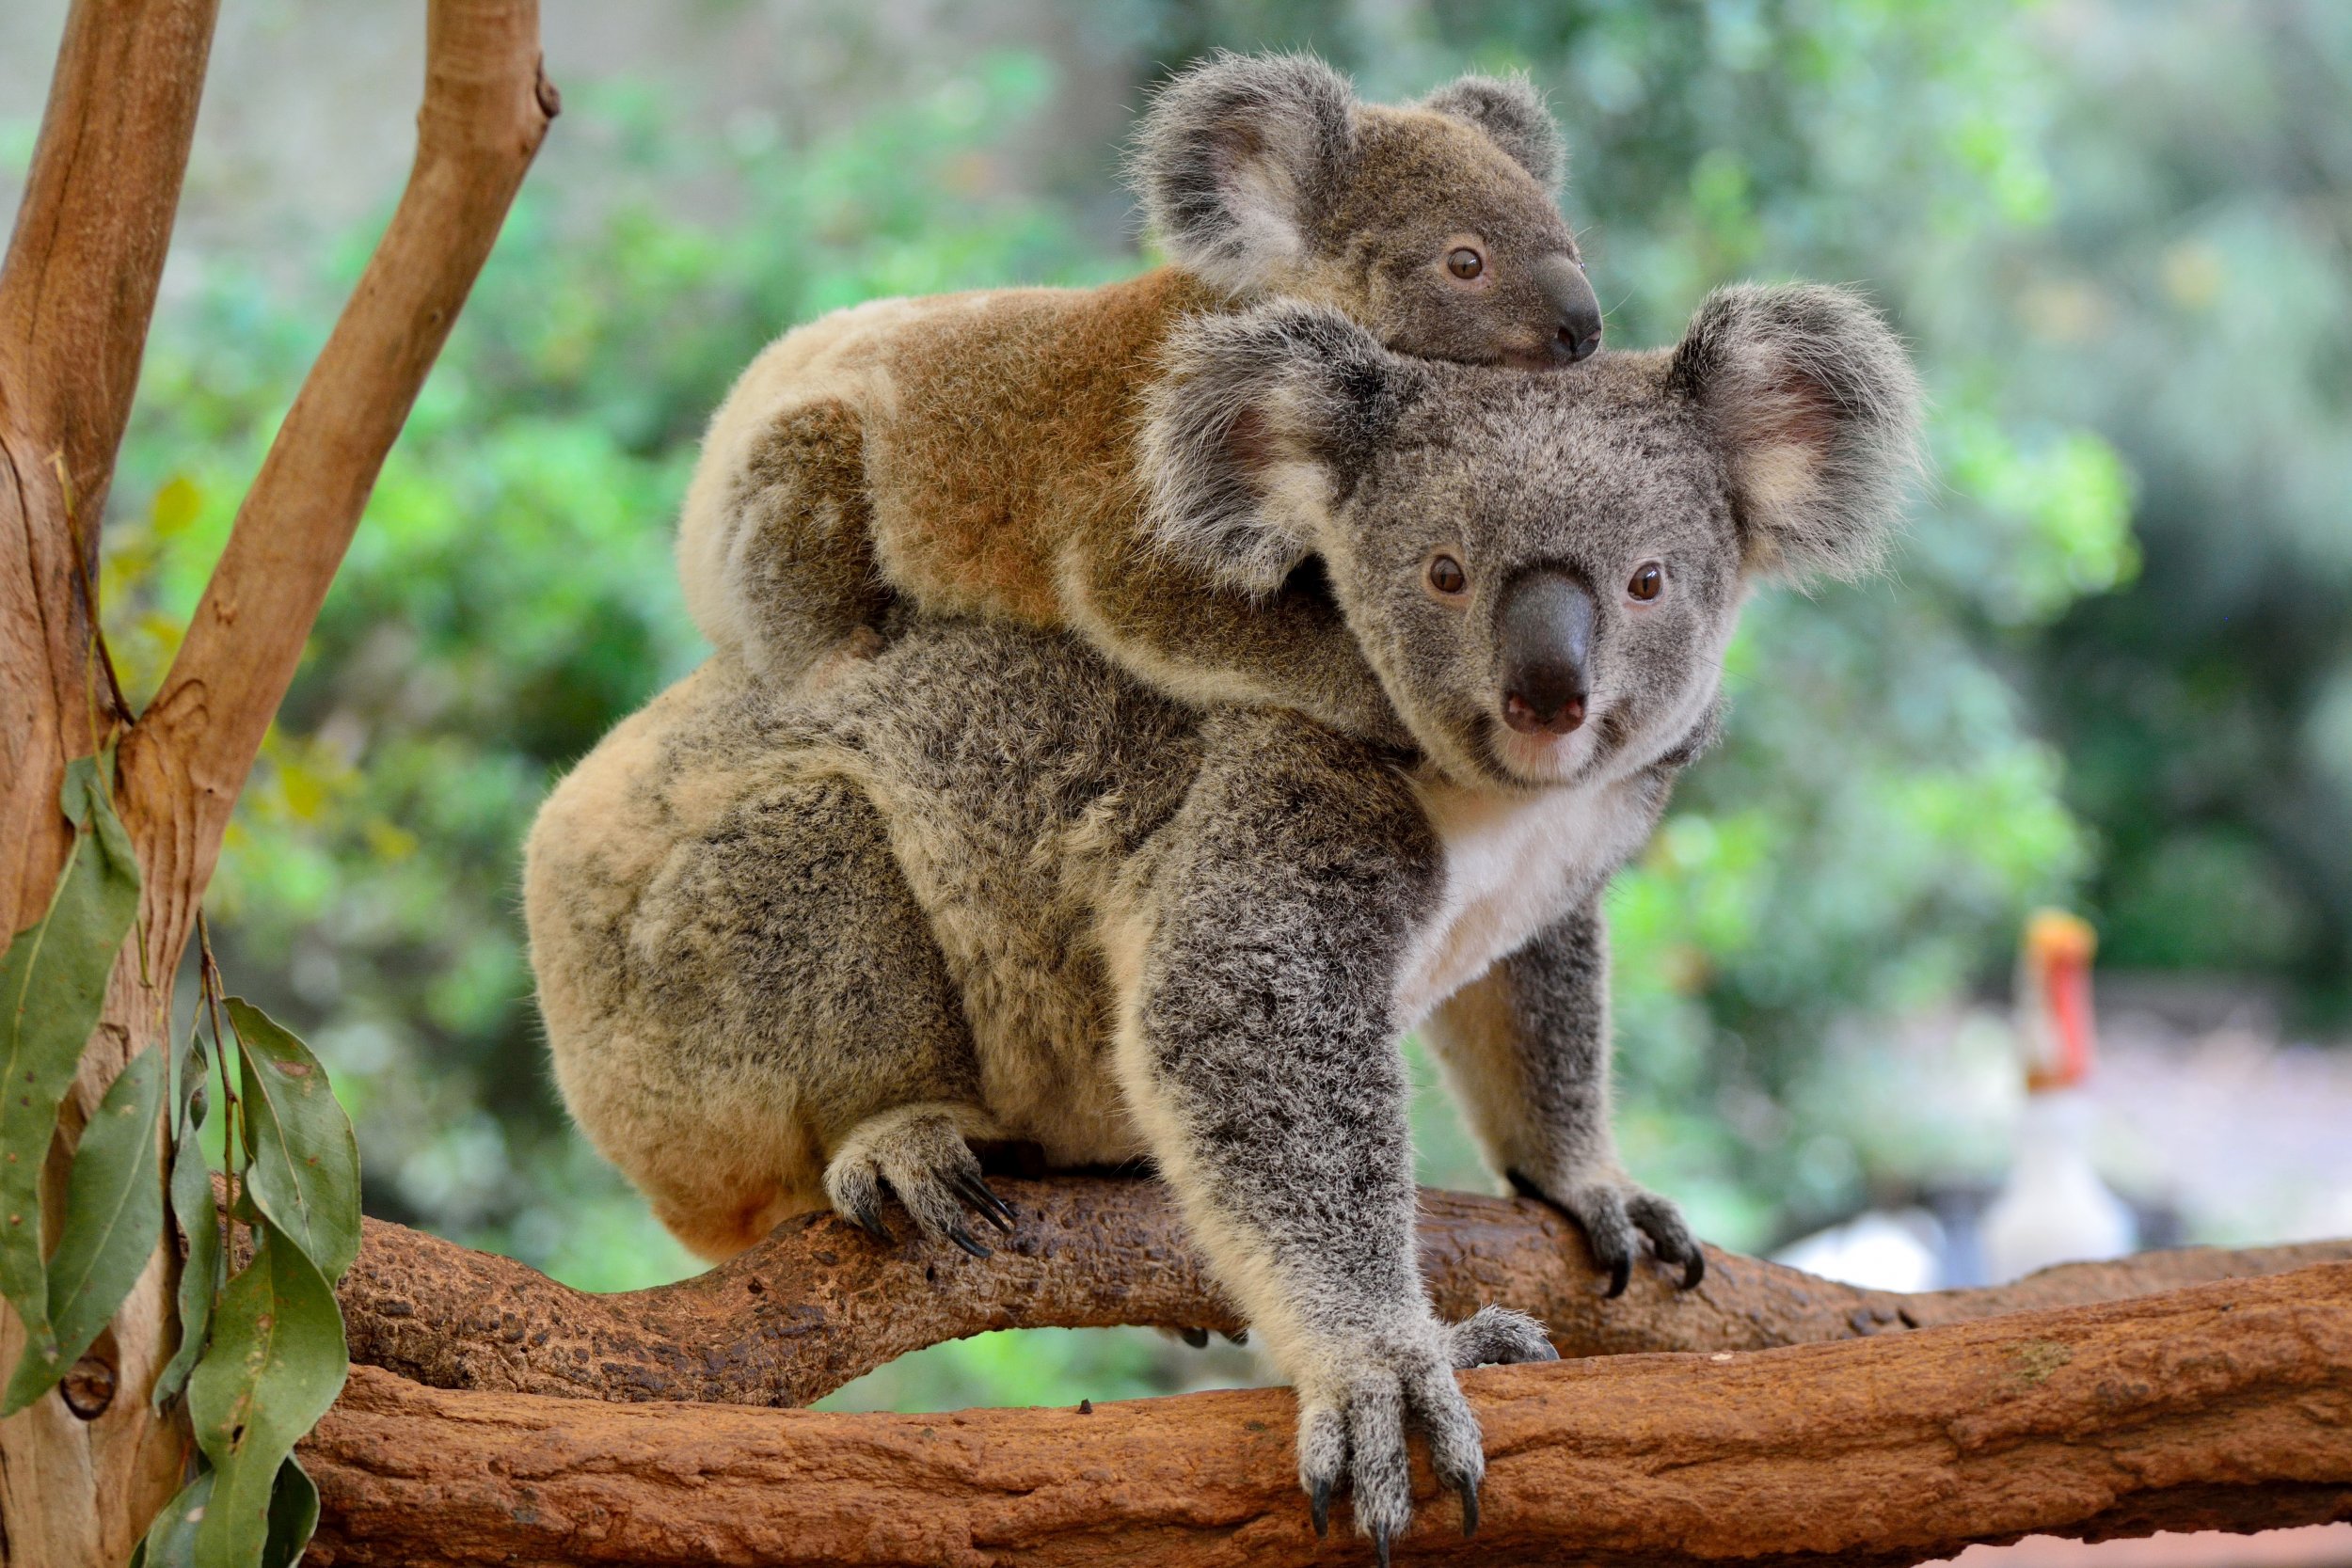 Former coal mine sites could provide koala habitats